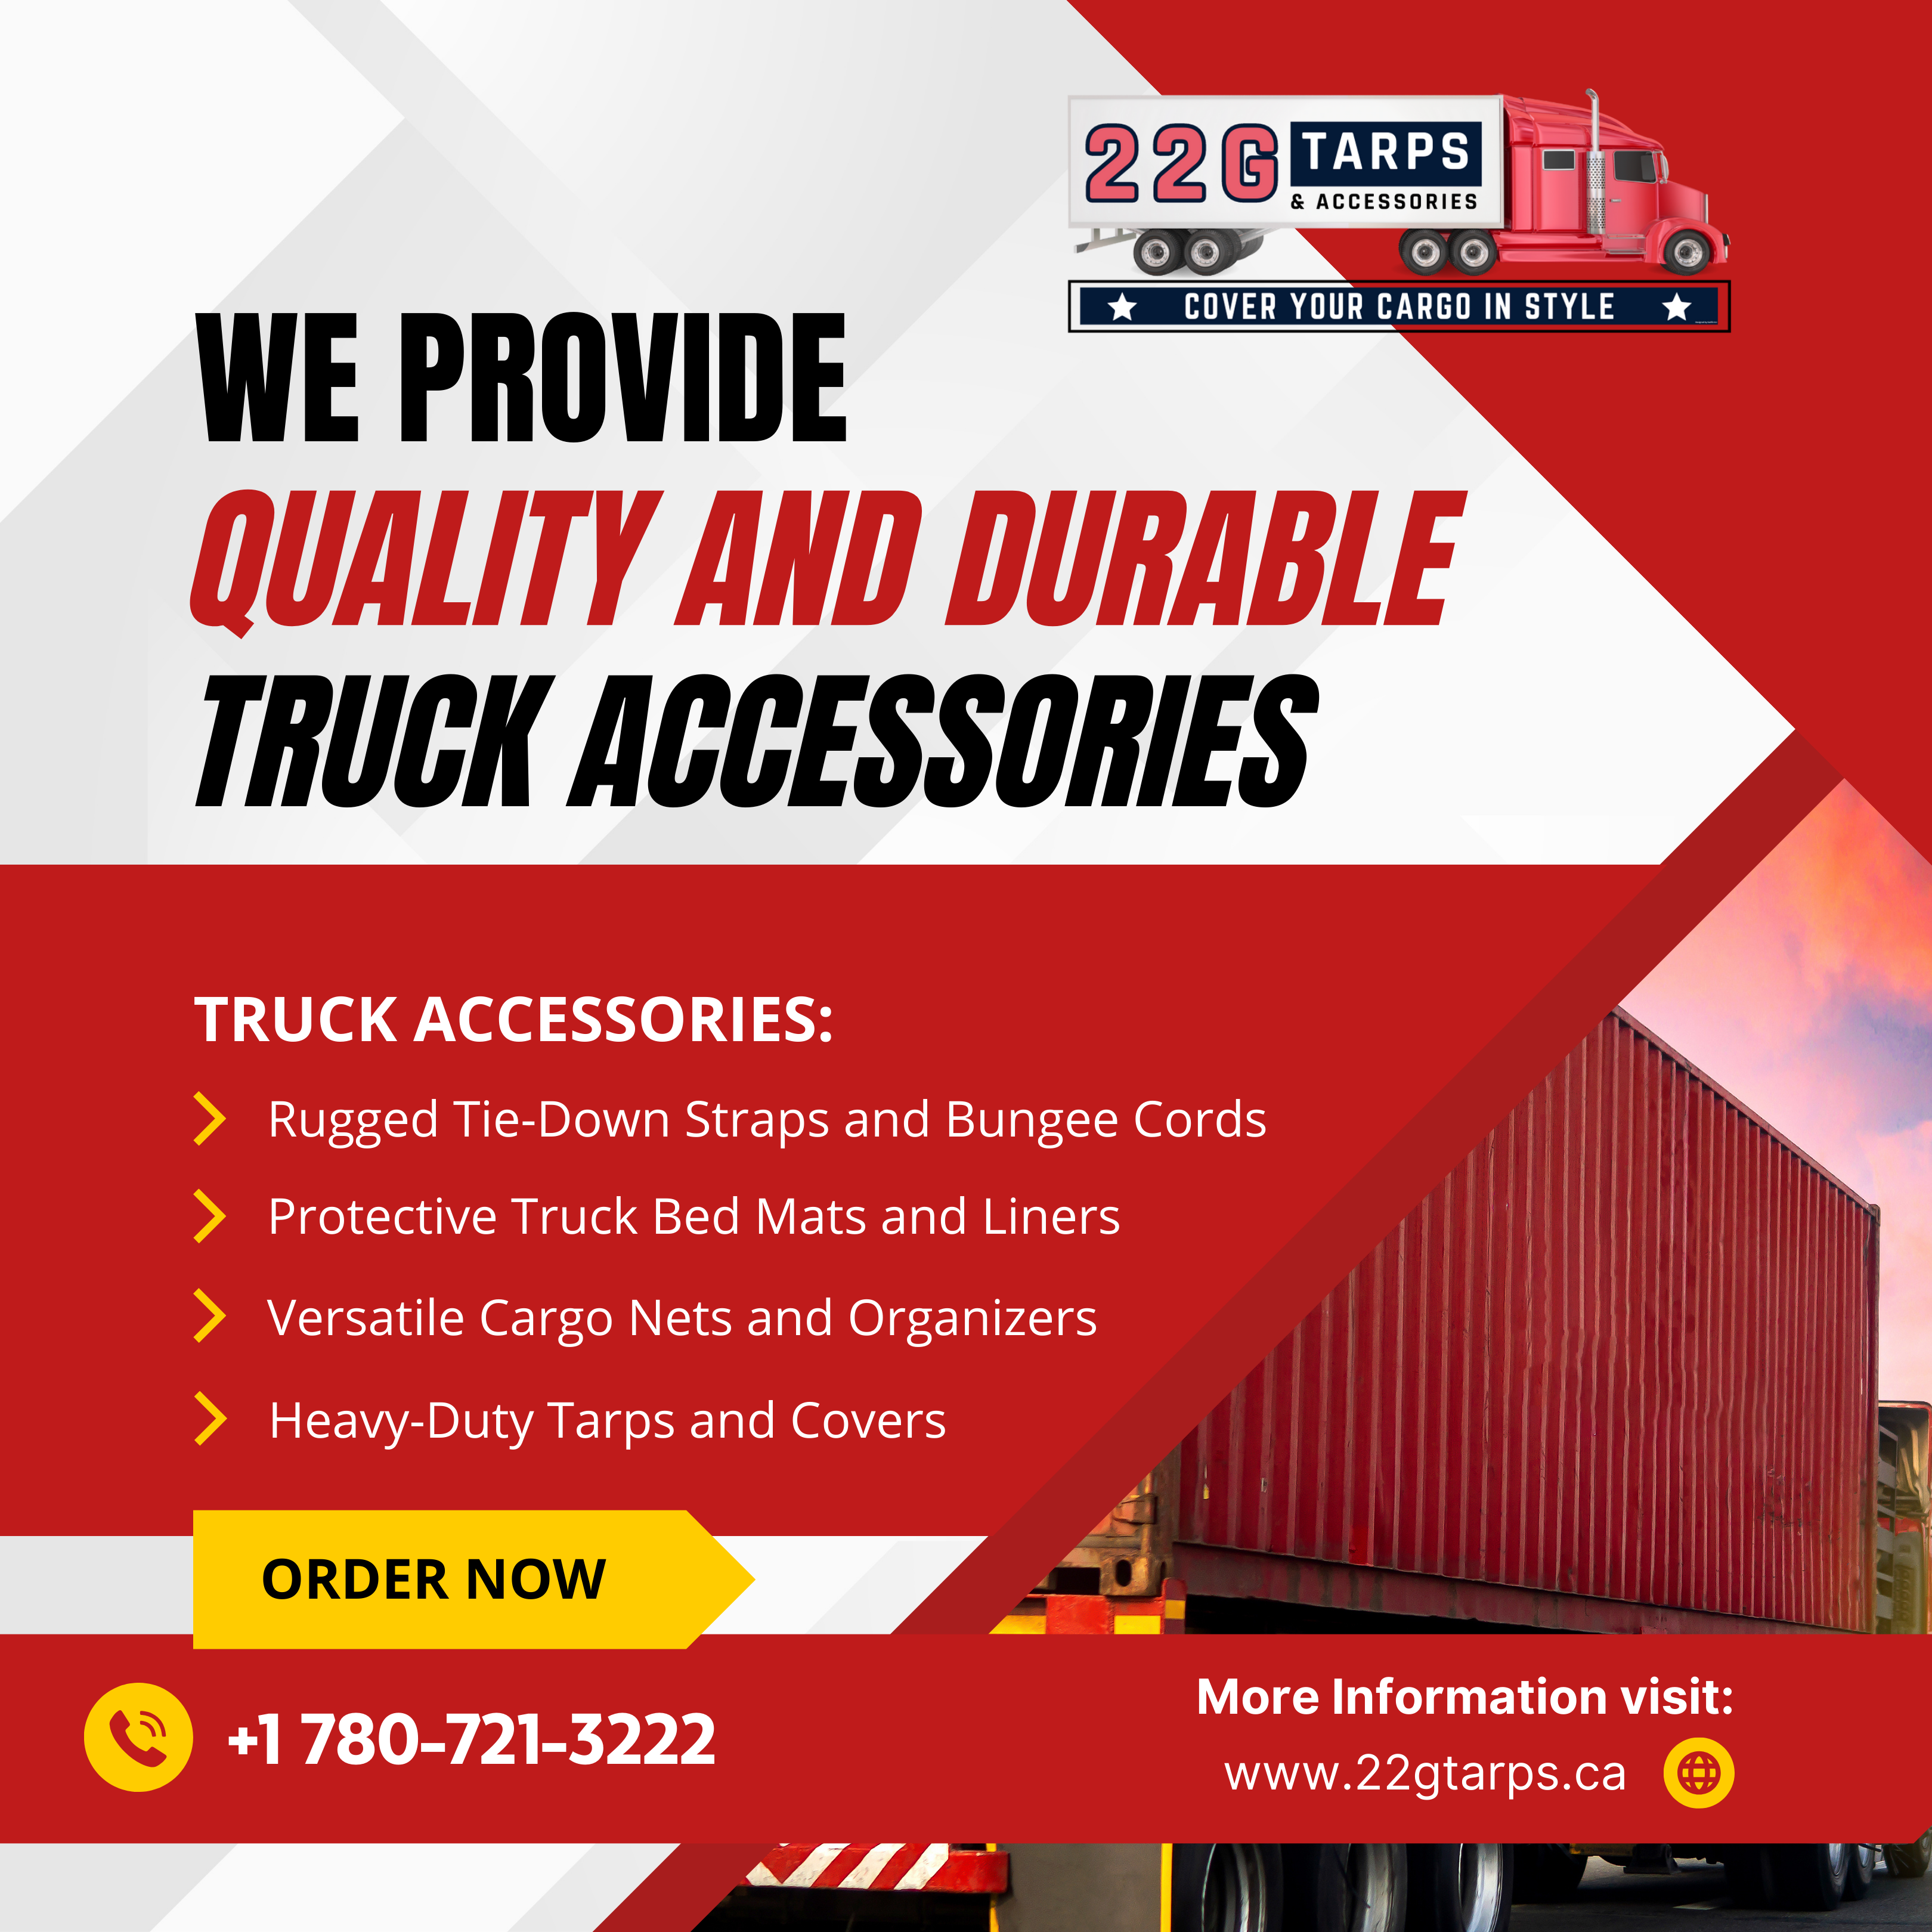 Durable truck accessories